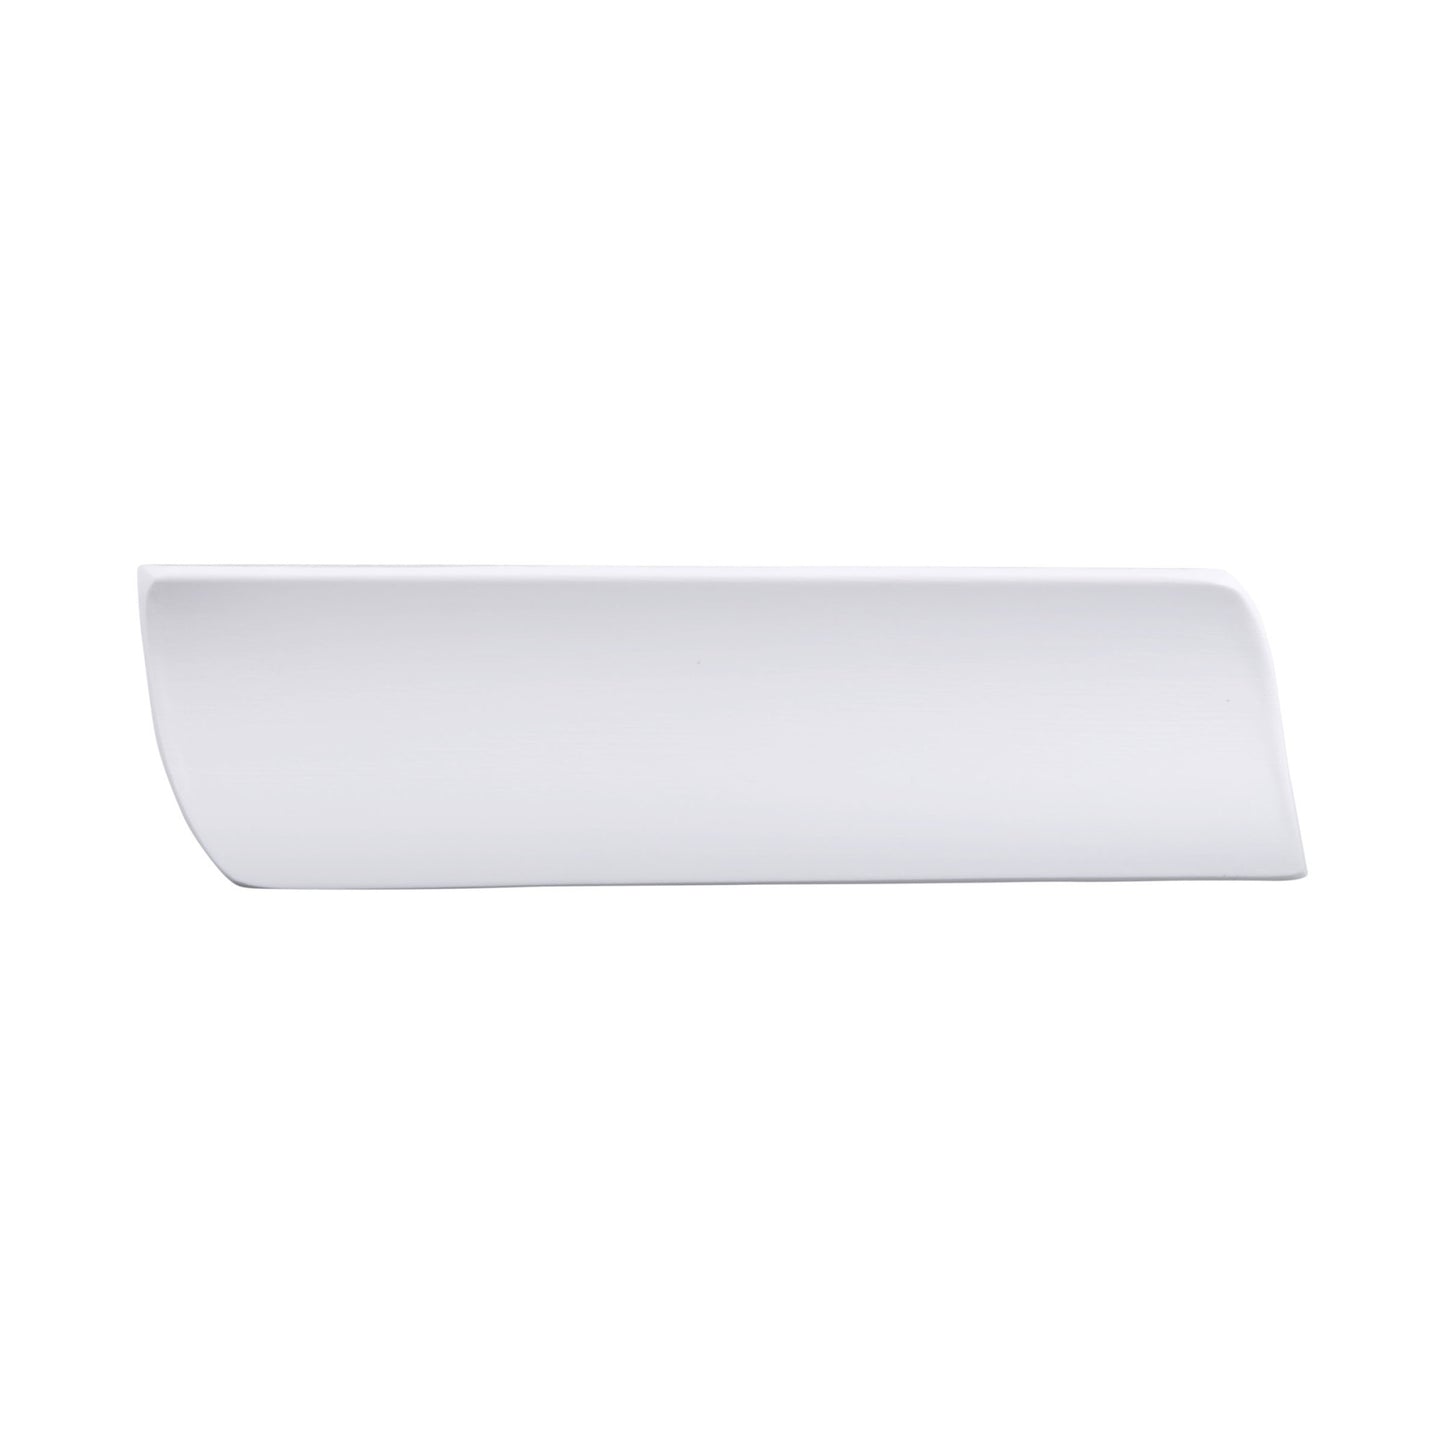 Melamine Towel Plate - White